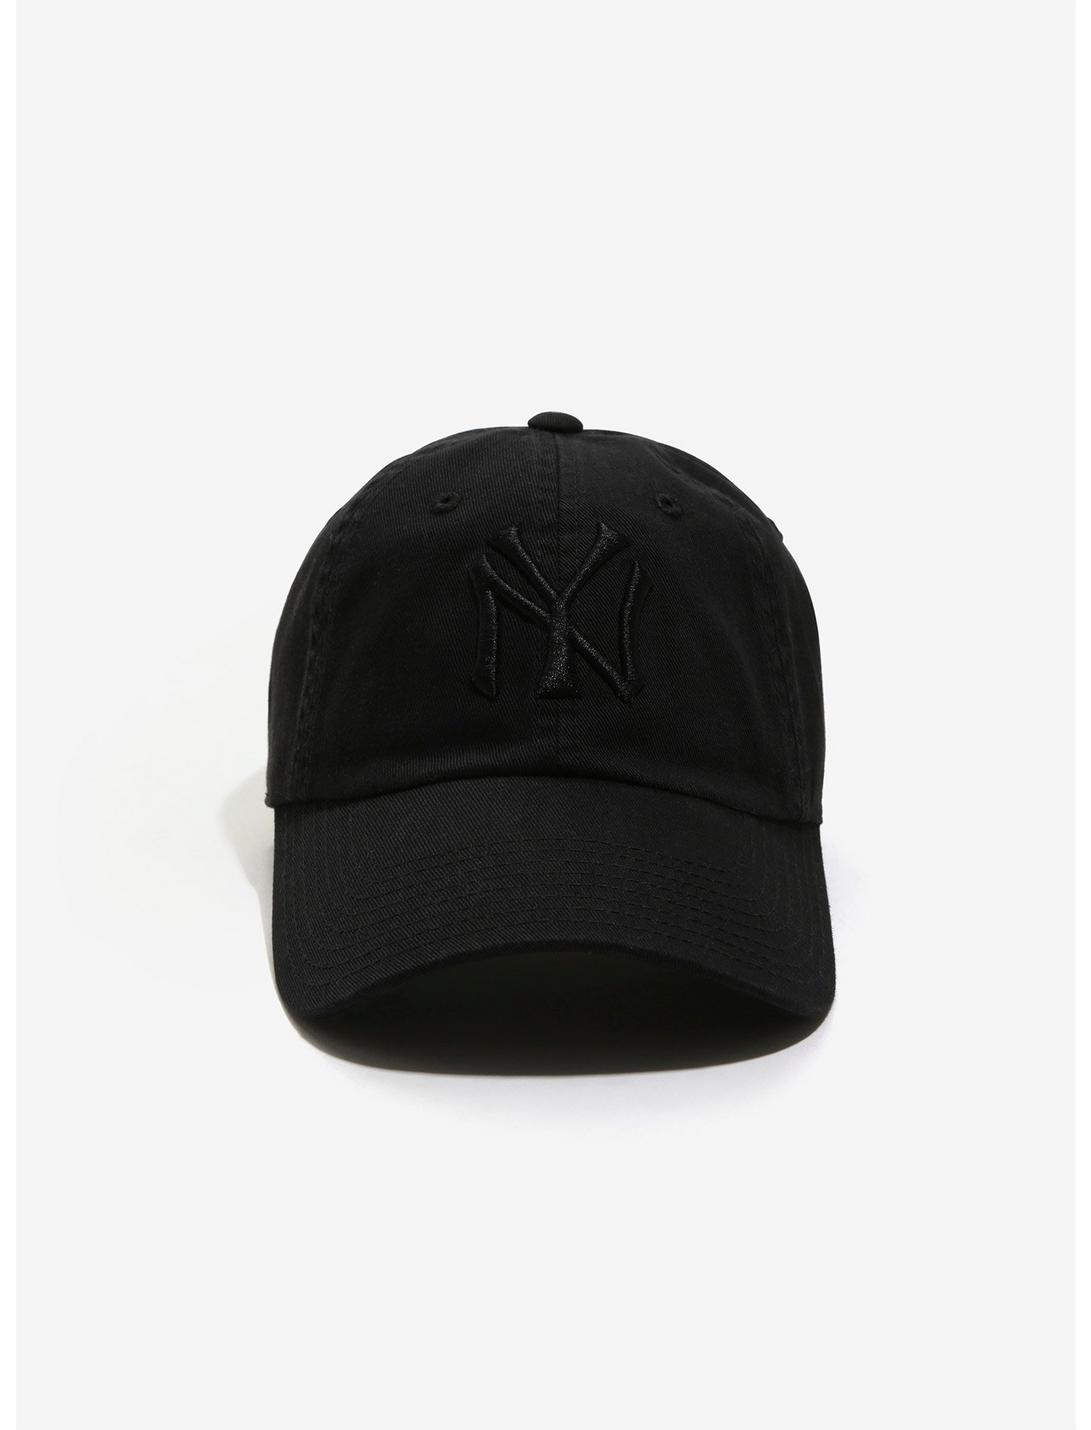 American Needle Tonal Yankees Black Ball Cap, , hi-res